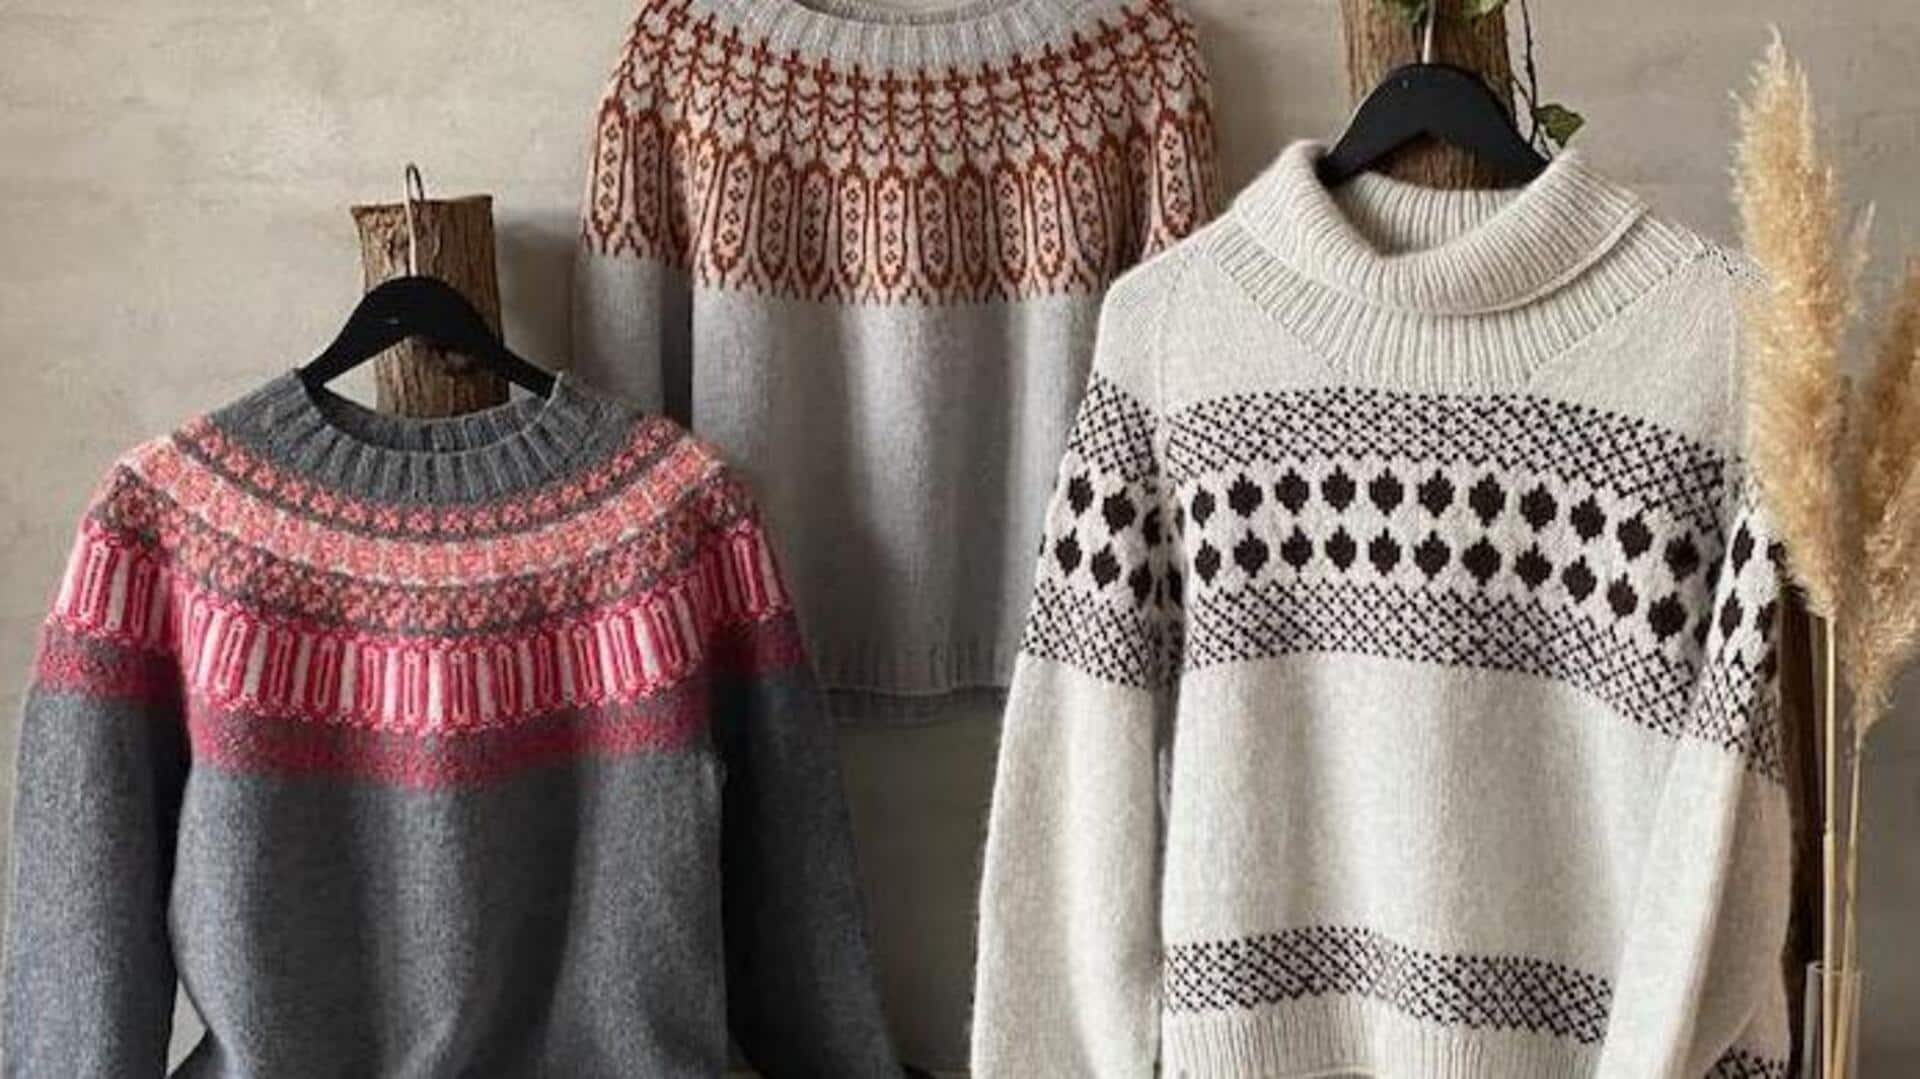 Scandinavian knitwear: How to incorporate it into your winter wardrobe